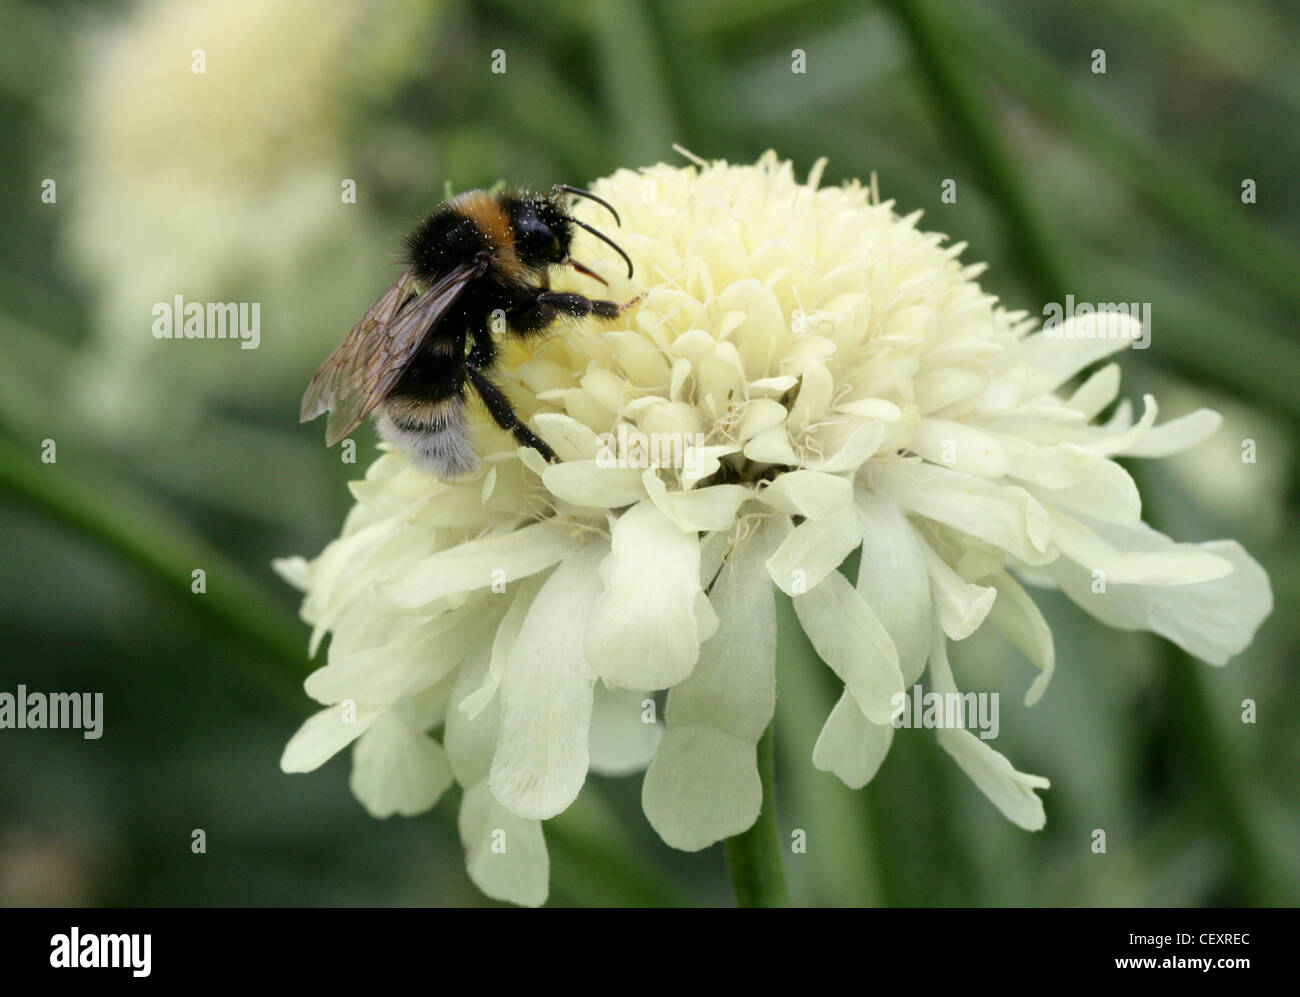 Heath Bumble-bee, Bombus jonellus, Apinae, Apidae, Hymenoptera on Mourning-Bride, Pincushion Flower, Scabius, Scabios songarica. Stock Photo